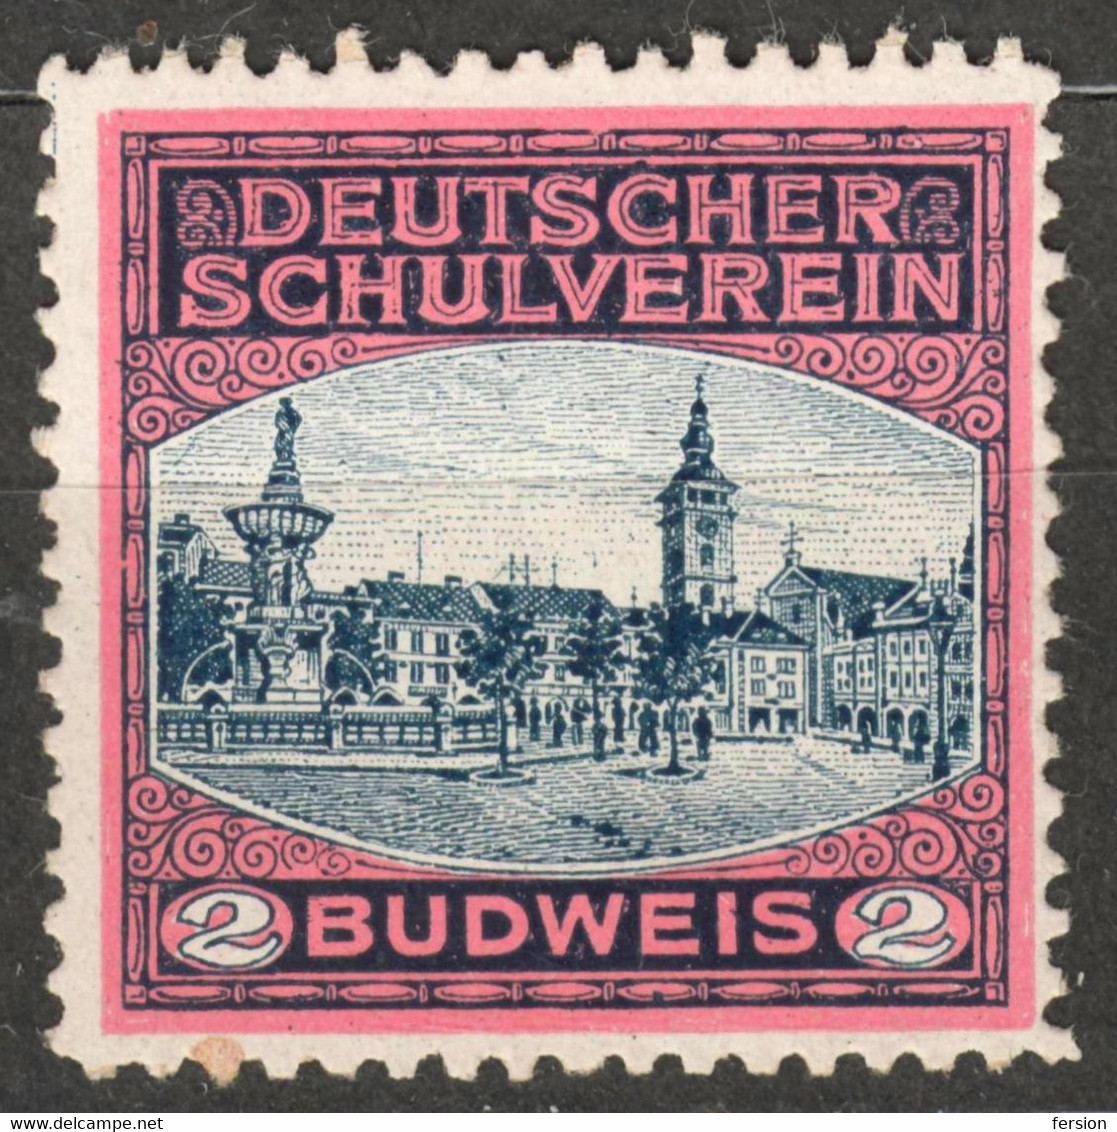 České Budějovice Budweis FOUNTAIN Czechia Bohemia Germany Austria Label Cinderella Vignette SCHOOL Deutscher Schulverein - ...-1918 Prephilately